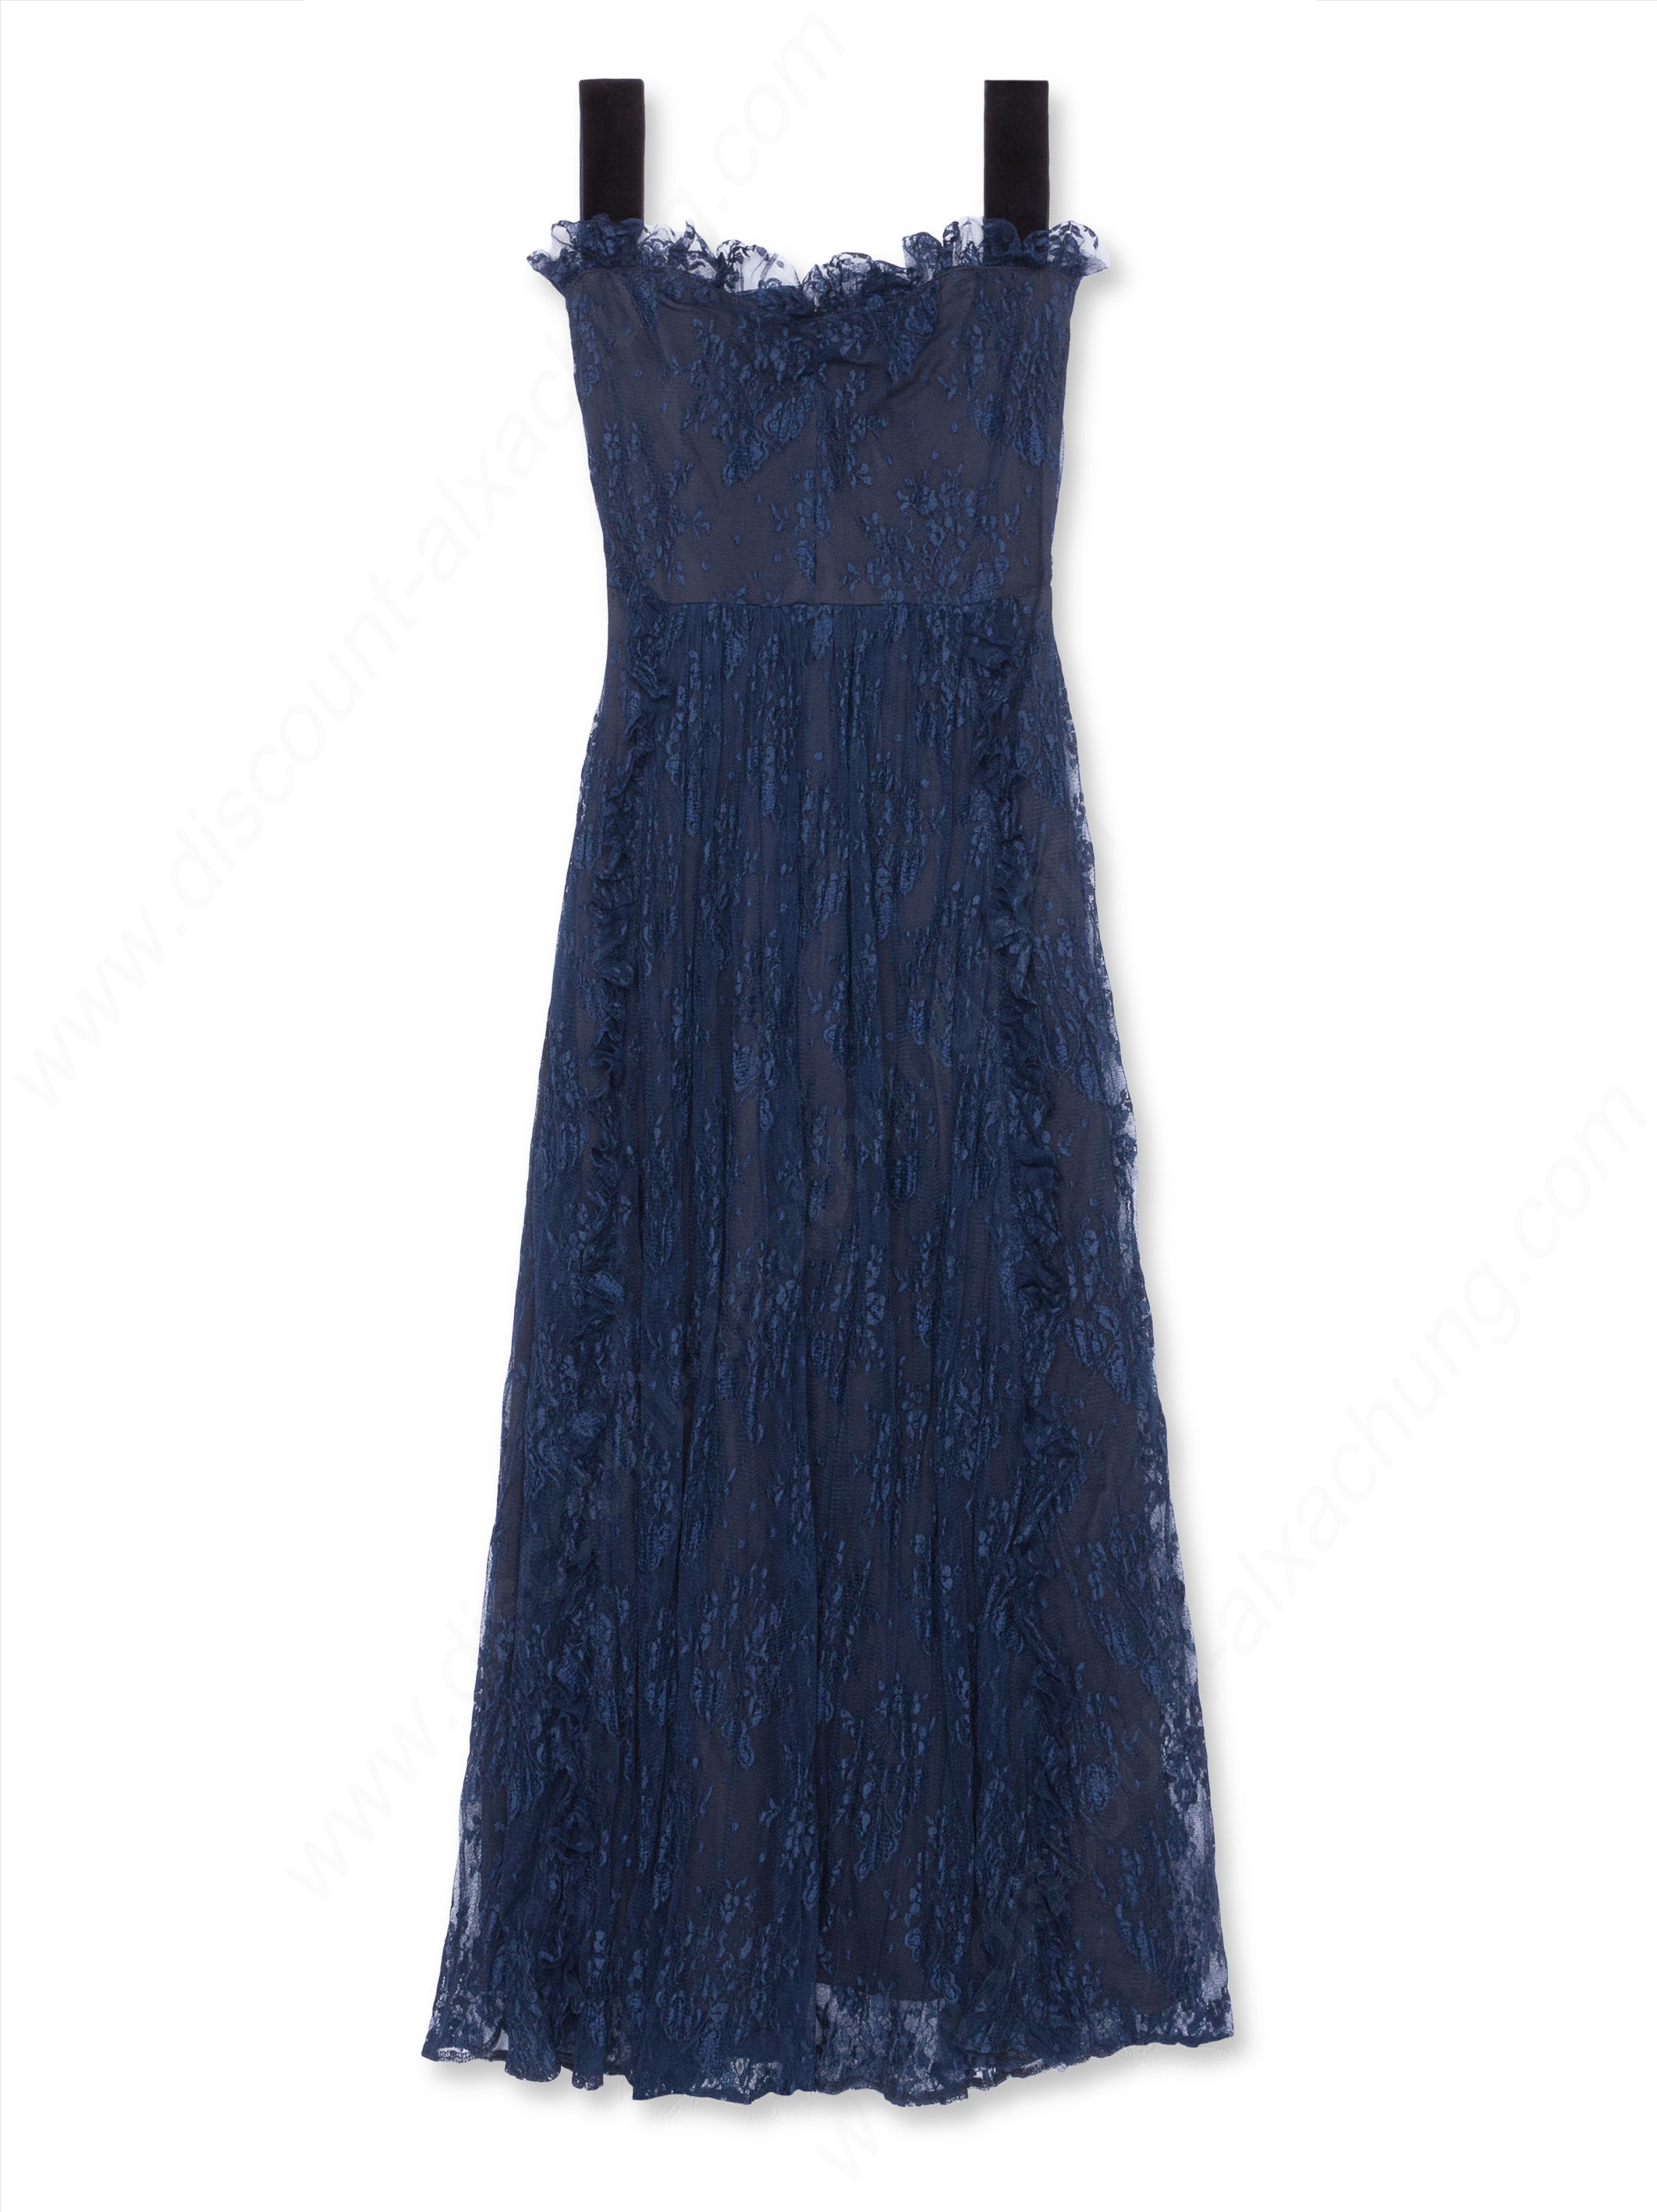 Alexachung Chantilly Lace Gathered Front Dress - Alexachung Chantilly Lace Gathered Front Dress